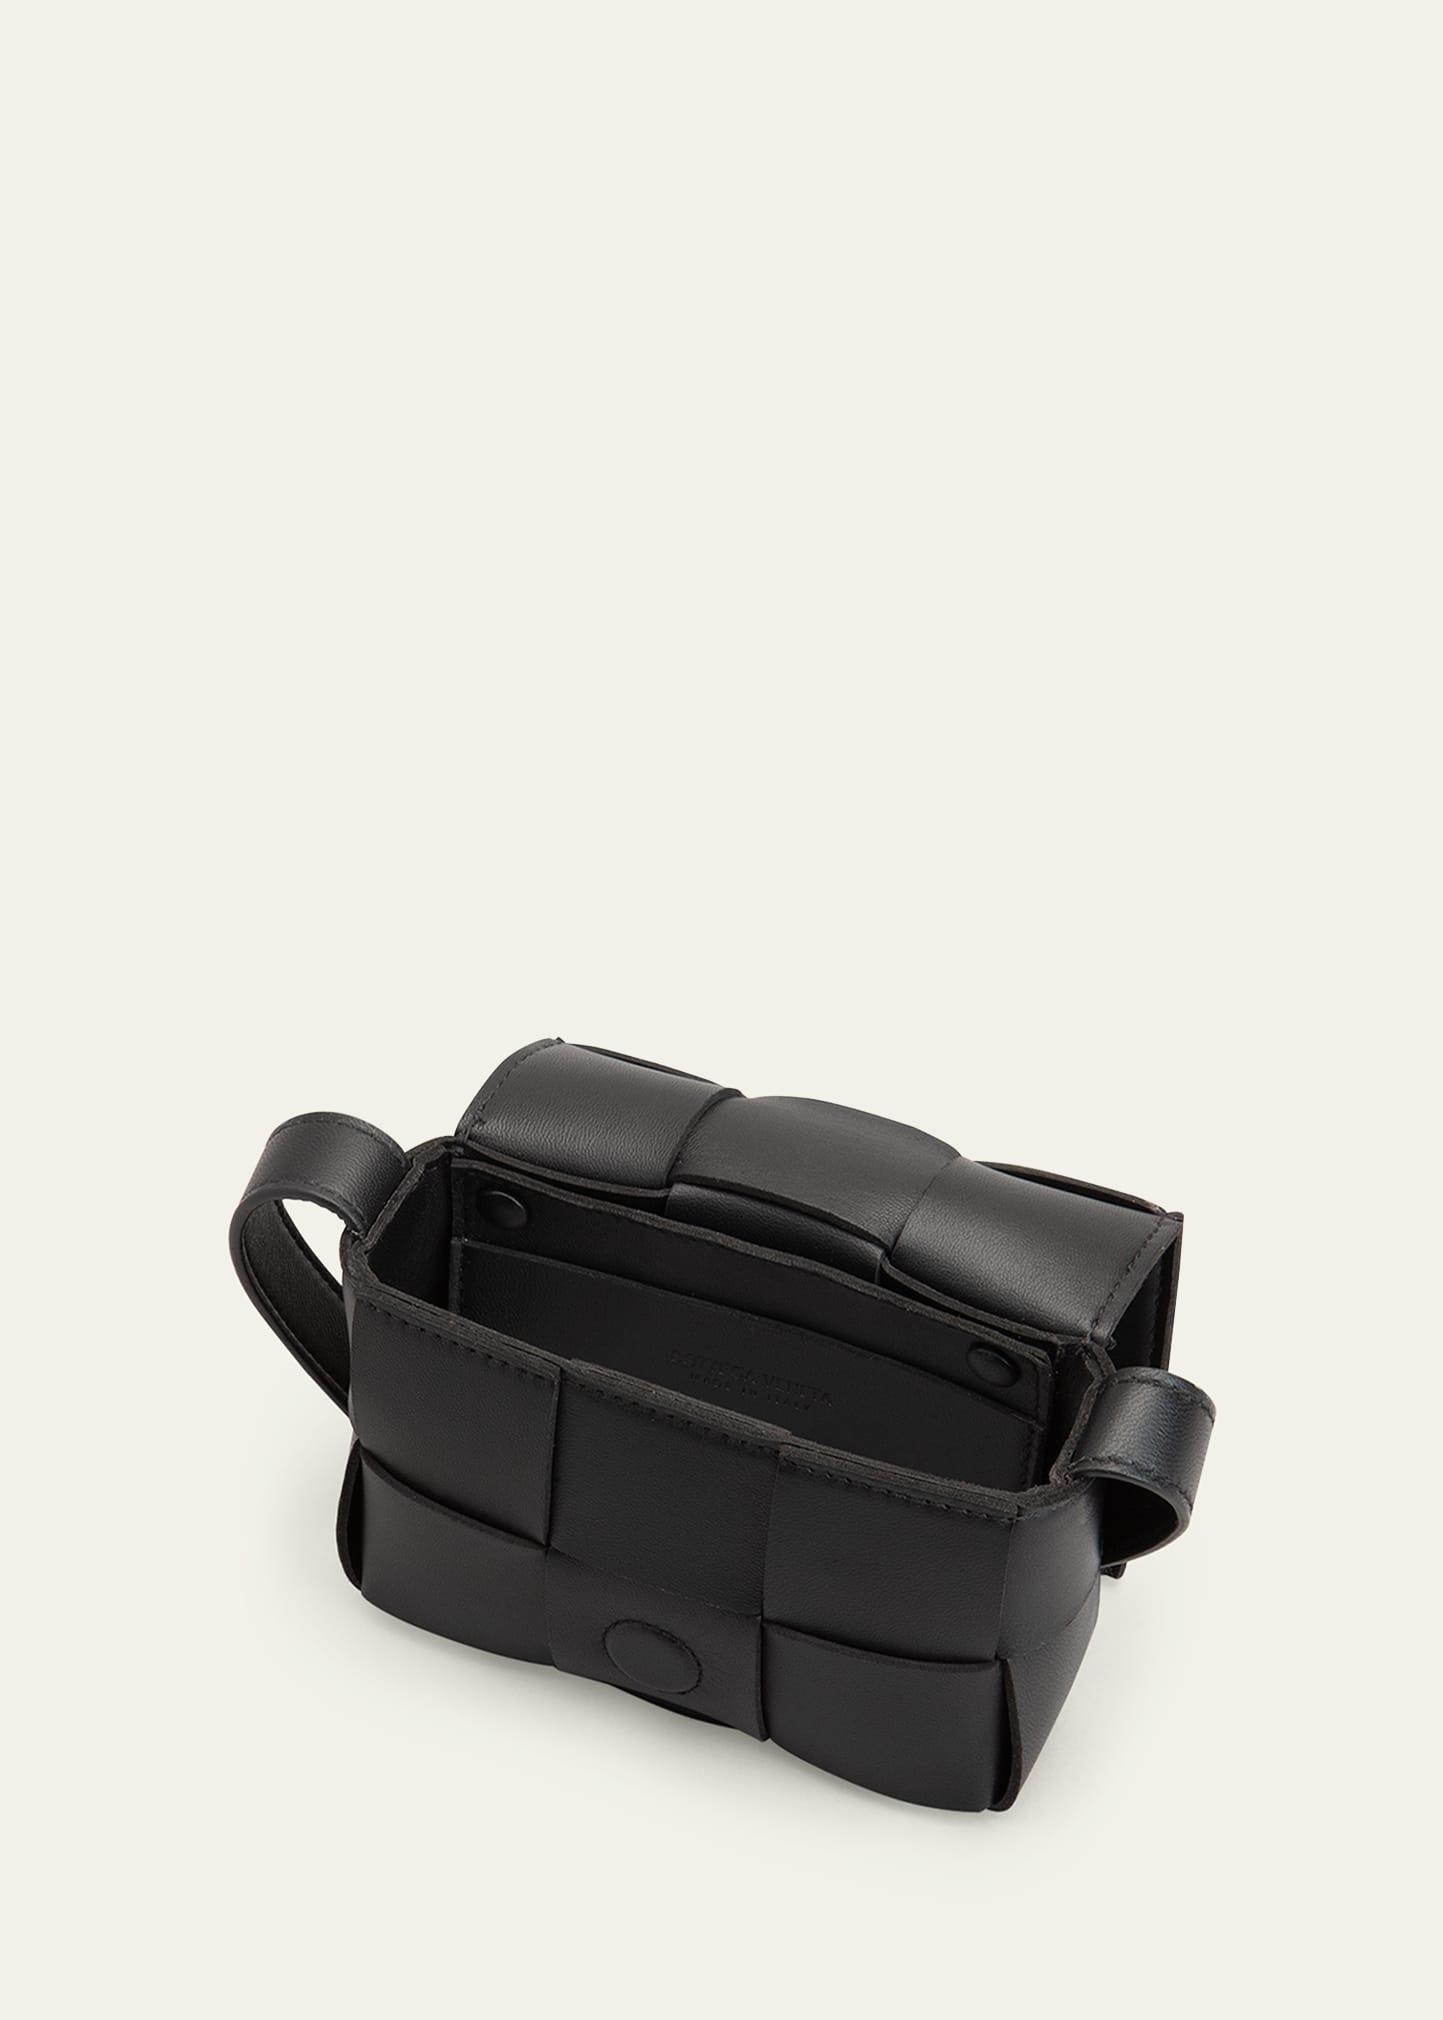 White Mini Intrecciato-leather cross-body bag, Bottega Veneta